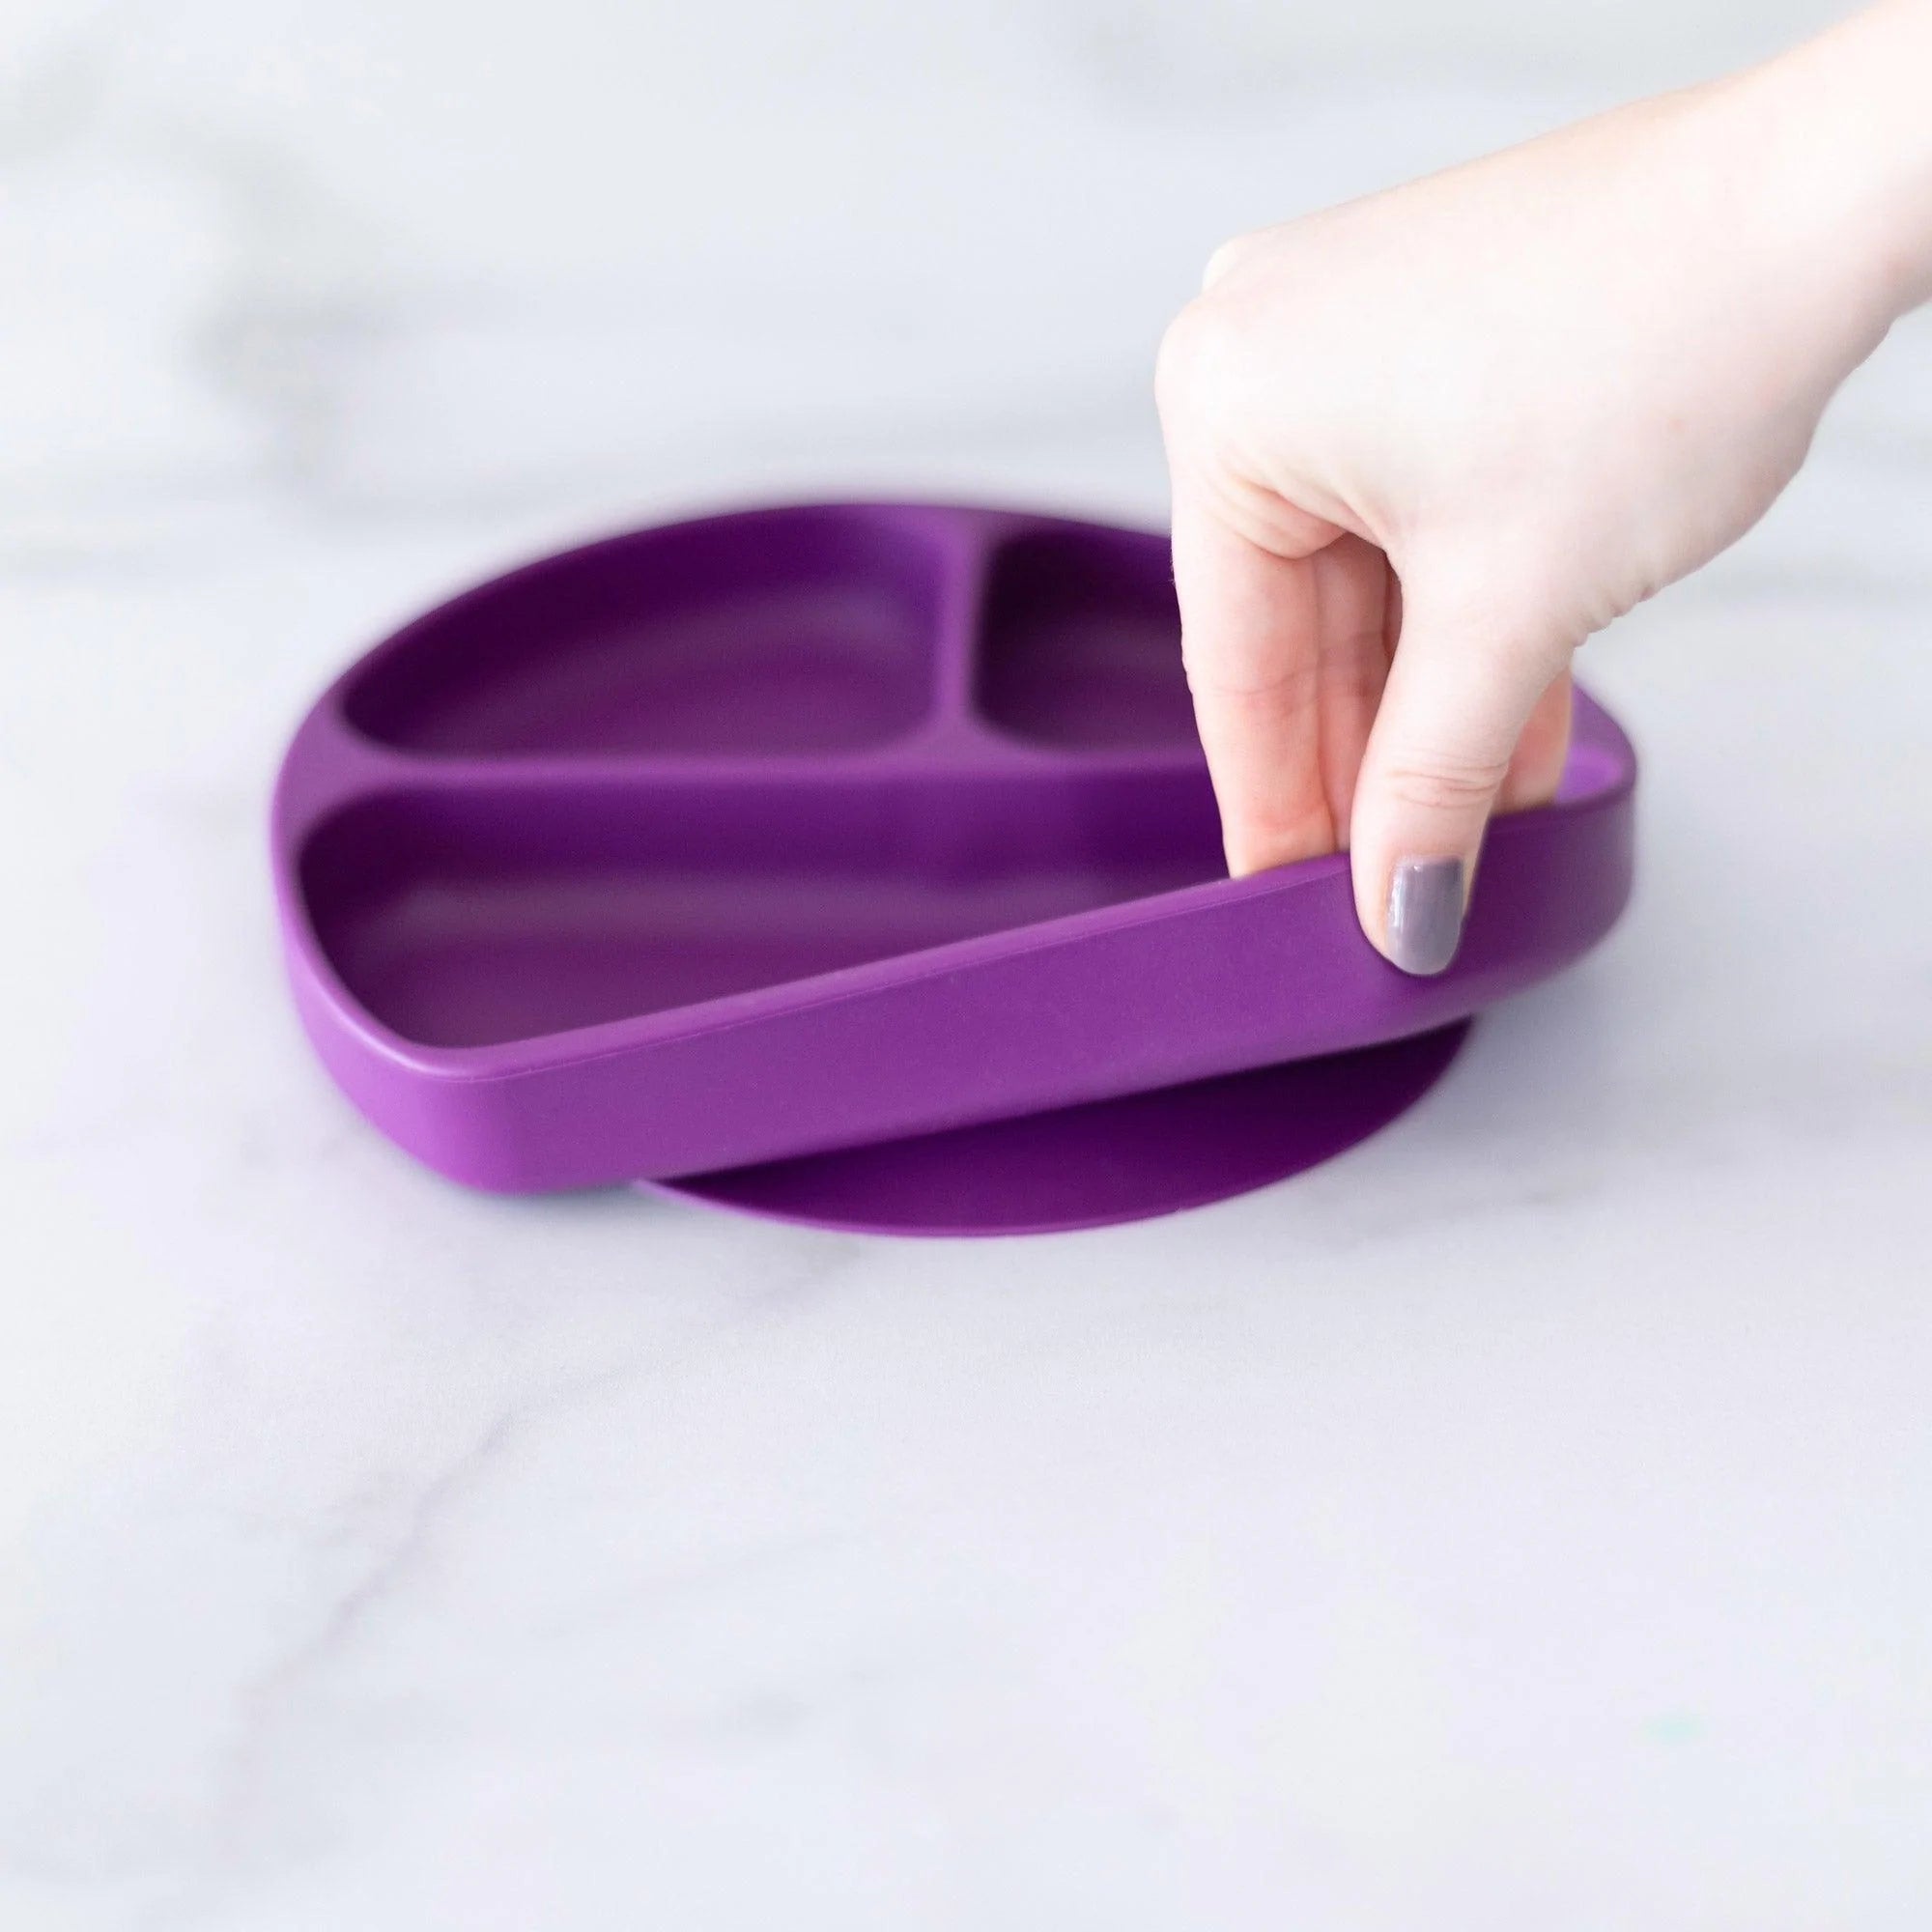 Silicone Grip Dish: Purple